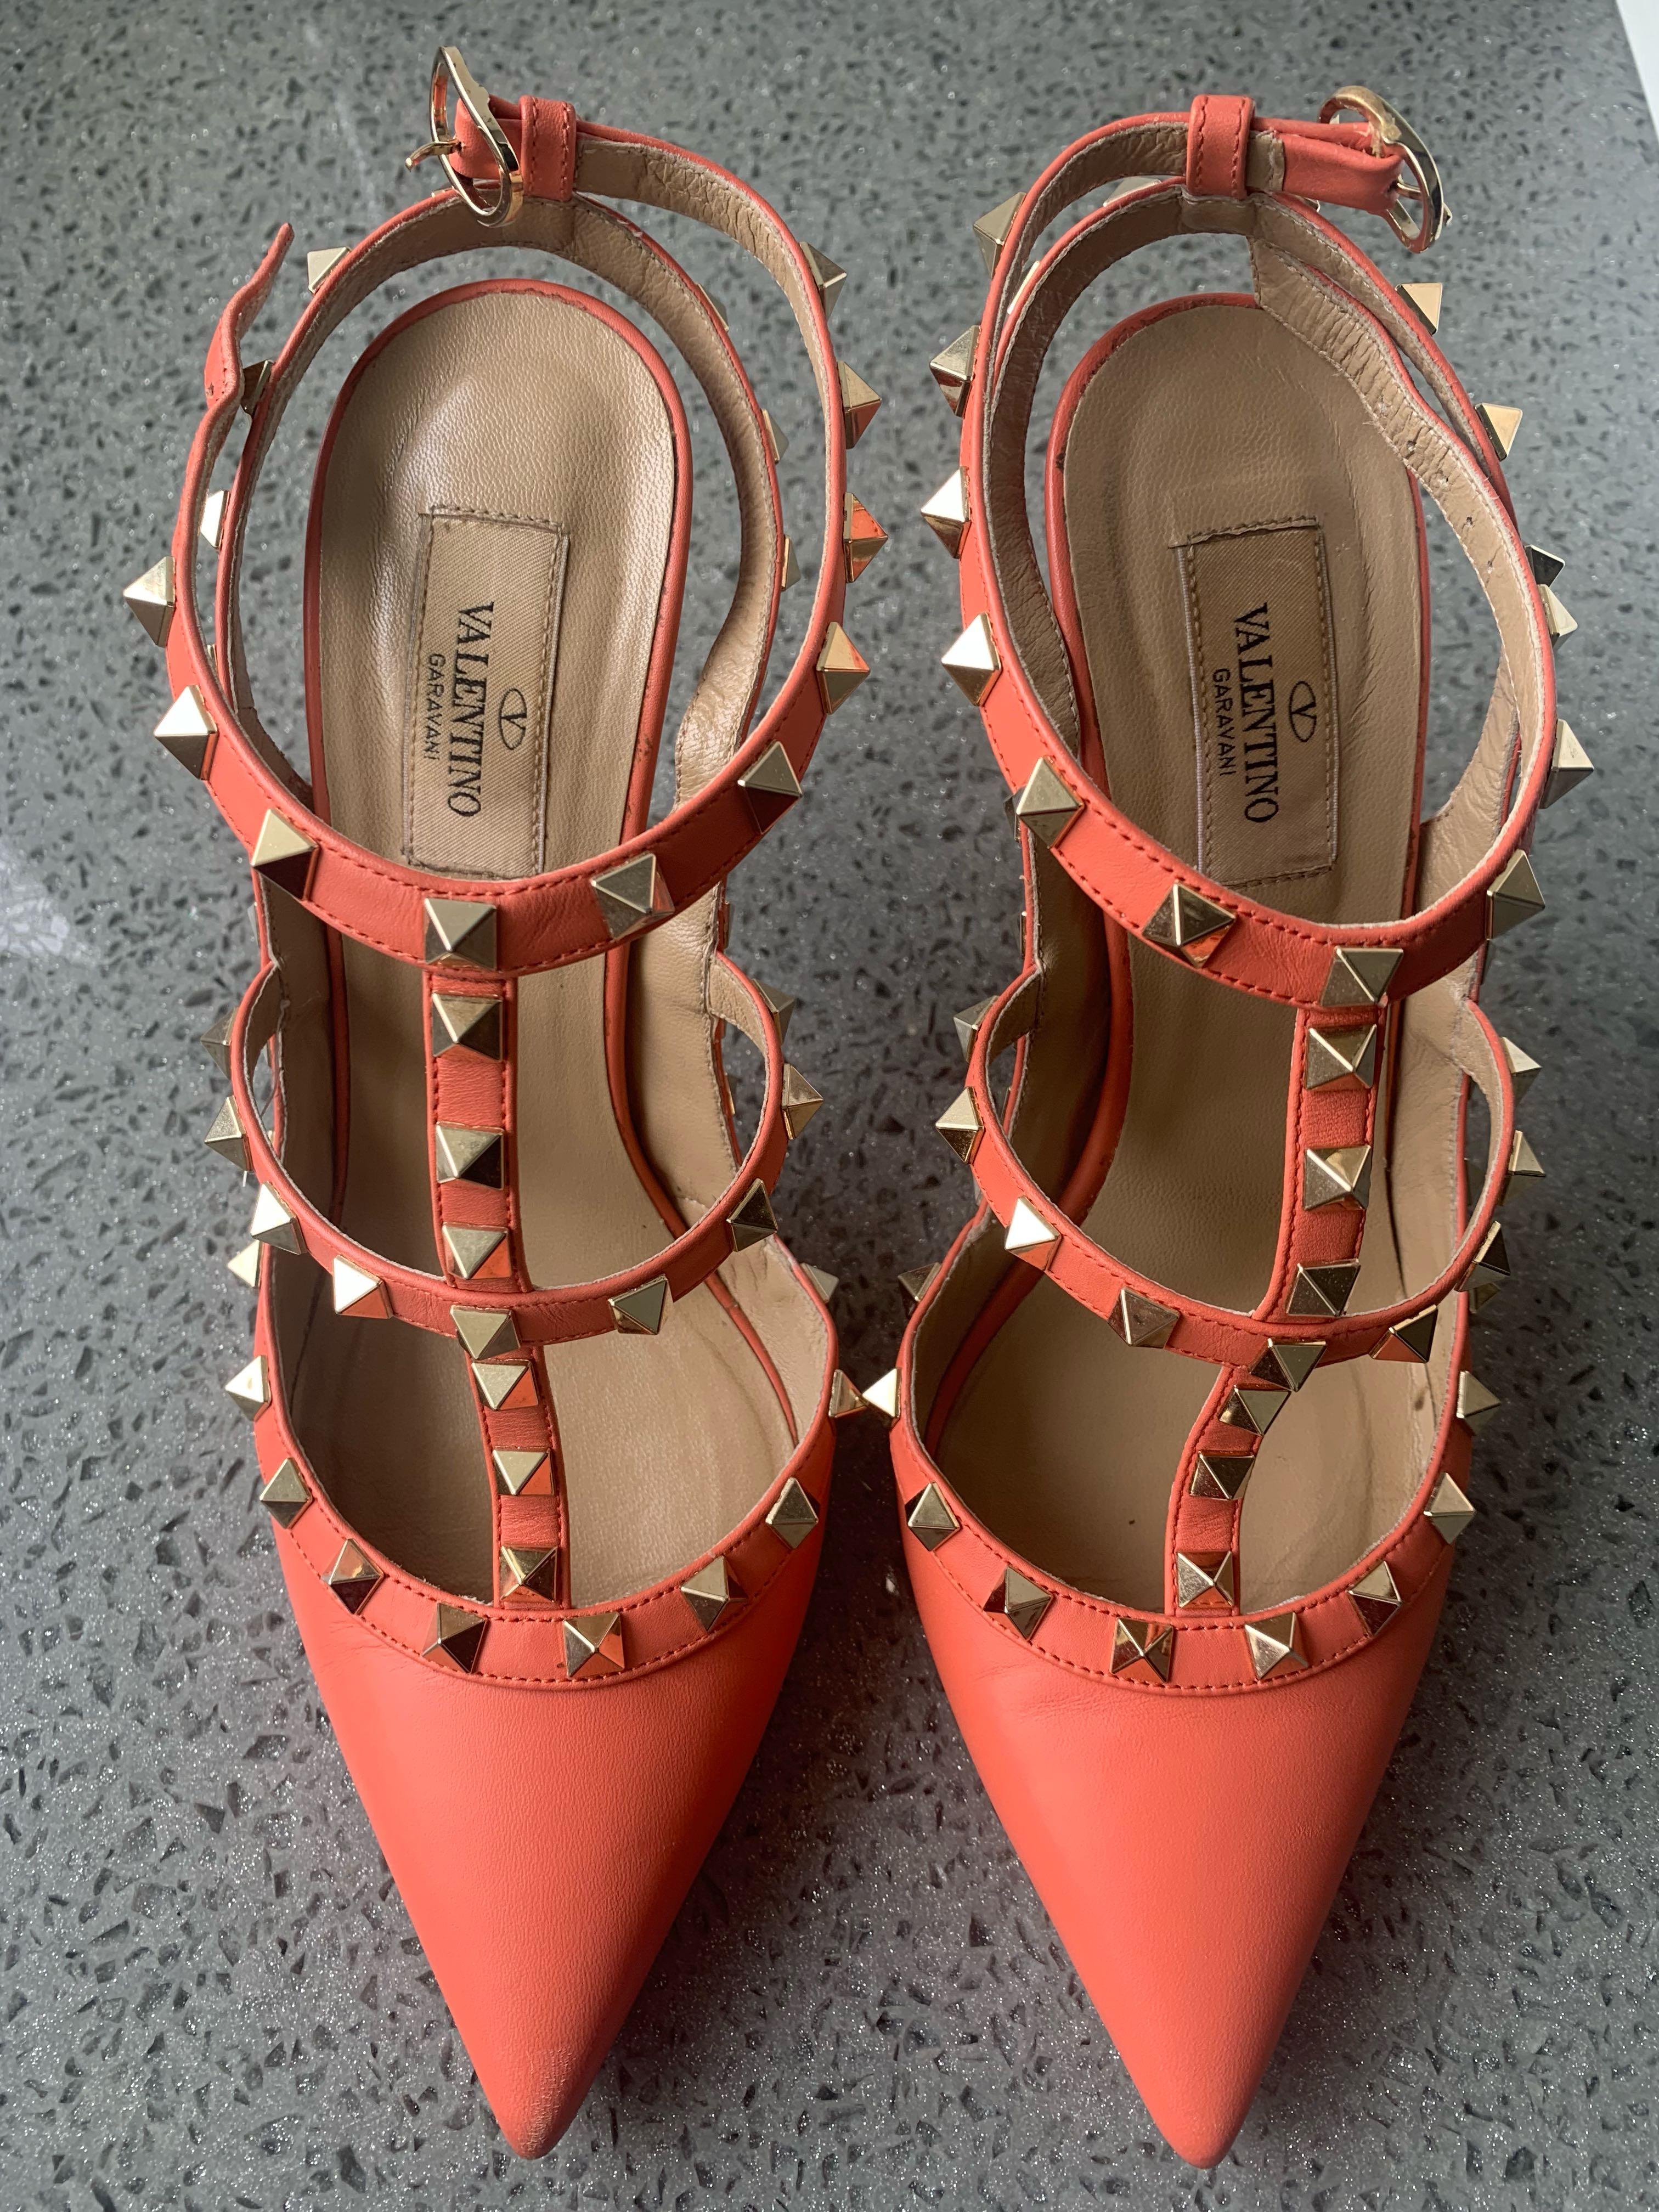 orange valentino heels